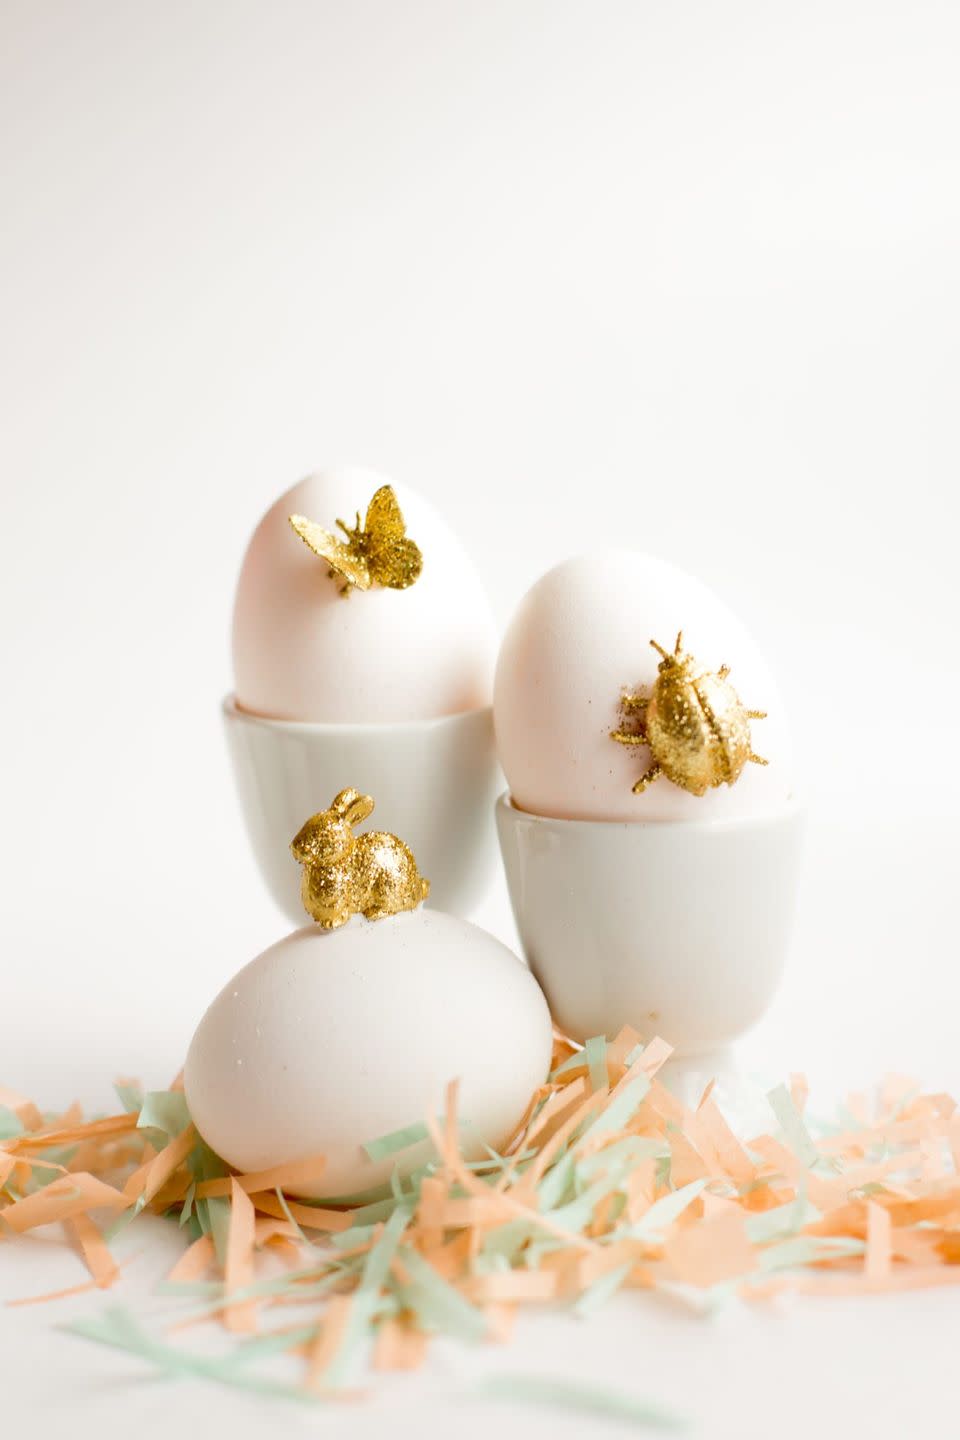 27) Gold Animal Eggs